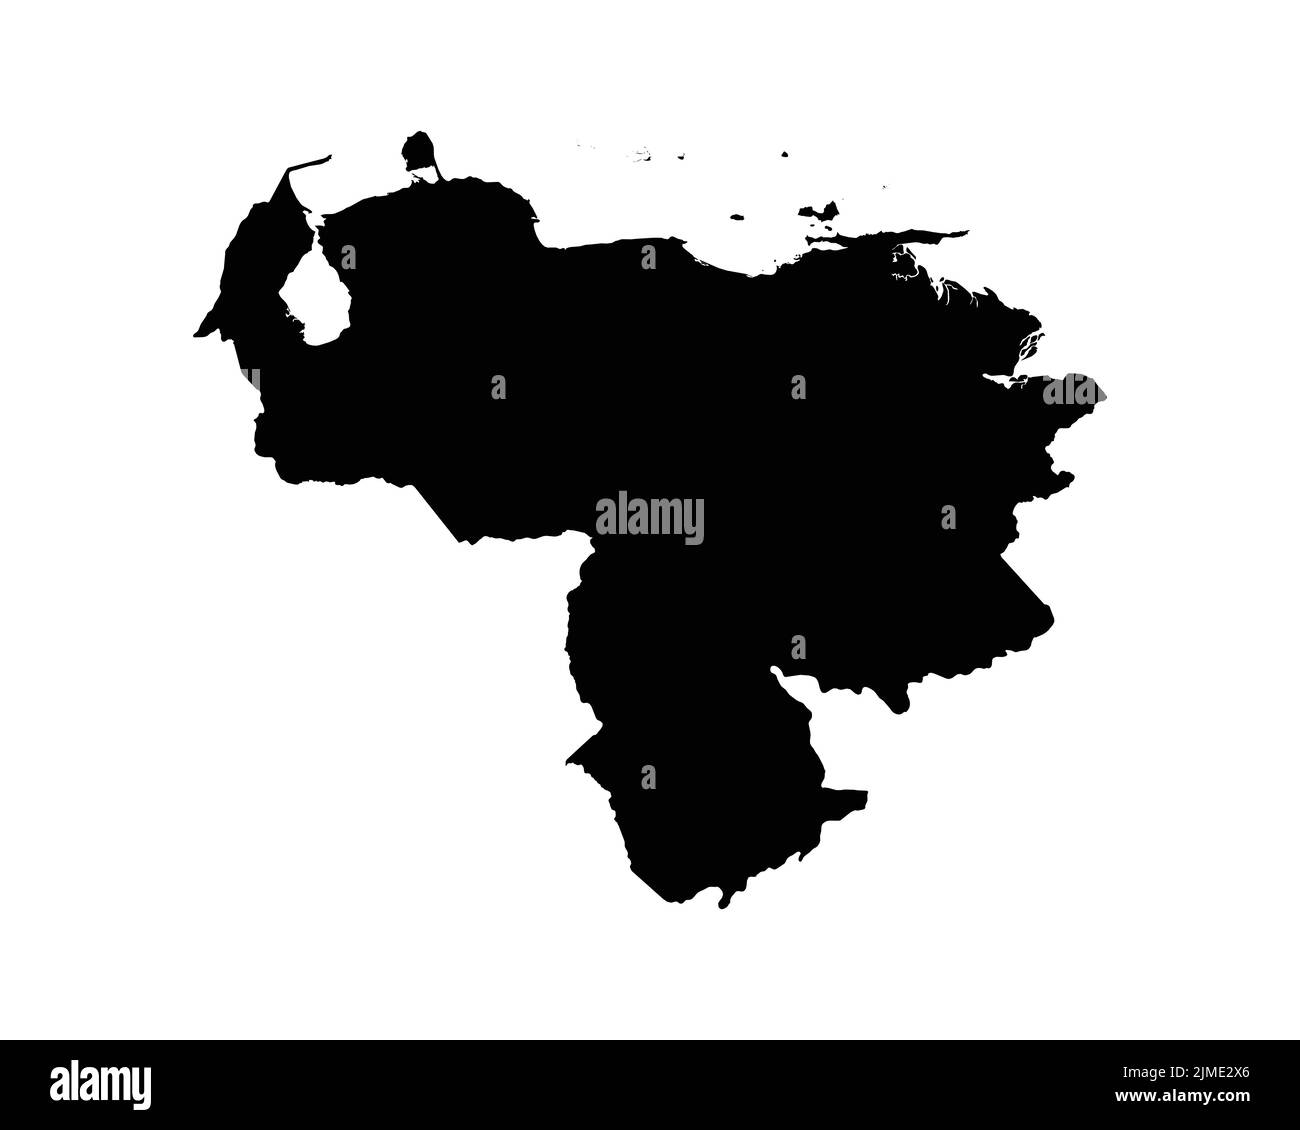 Venezuela Map. Venezuelan Country Map. Black and White National Nation Geography Outline Border Boundary Territory Shape Vector Illustration EPS Clipa Stock Vector